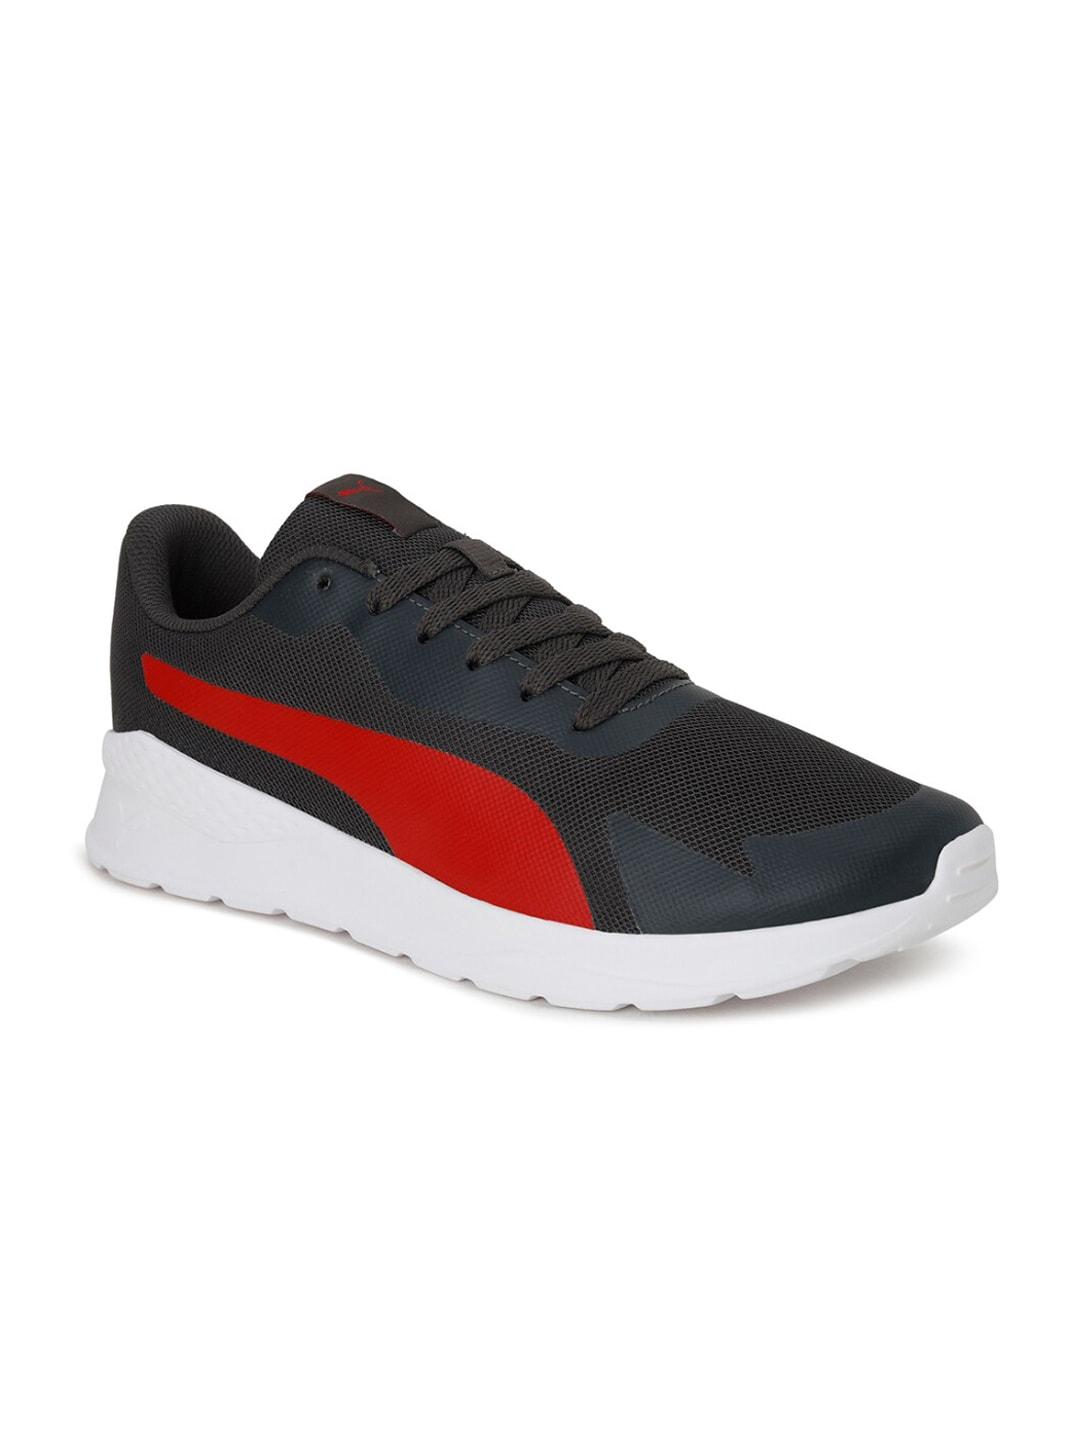 Puma Men Navy Blue & Red Colourblocked Sneakers